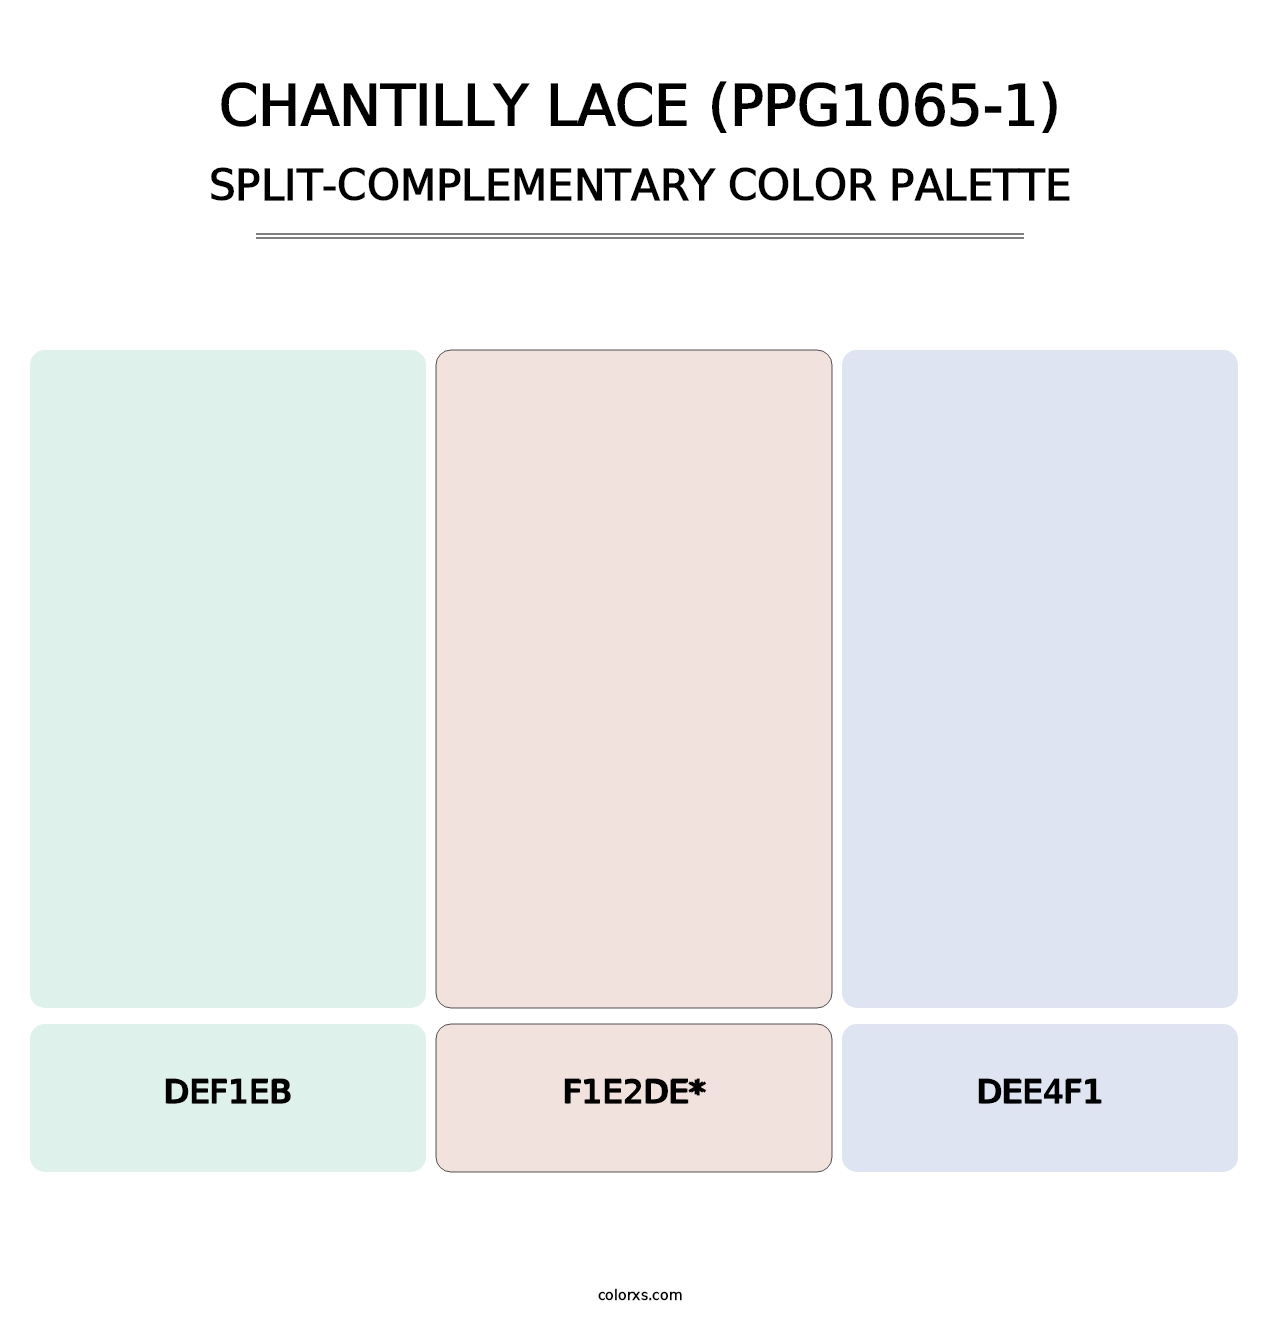 Chantilly Lace (PPG1065-1) - Split-Complementary Color Palette